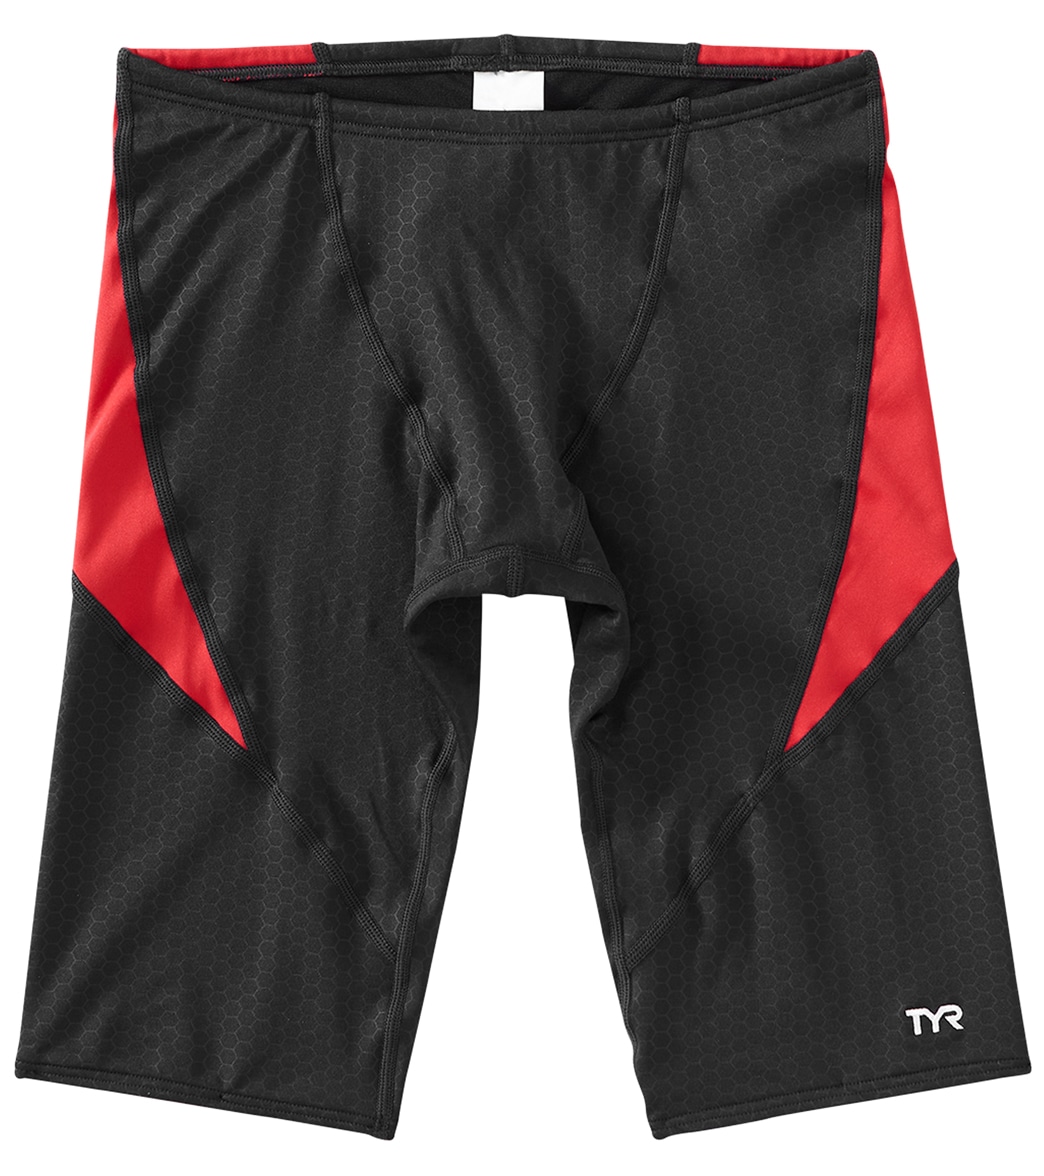 TYR Boys' Hexa Curve Splice Jammer Swimsuit - Black/Red 22 - Swimoutlet.com